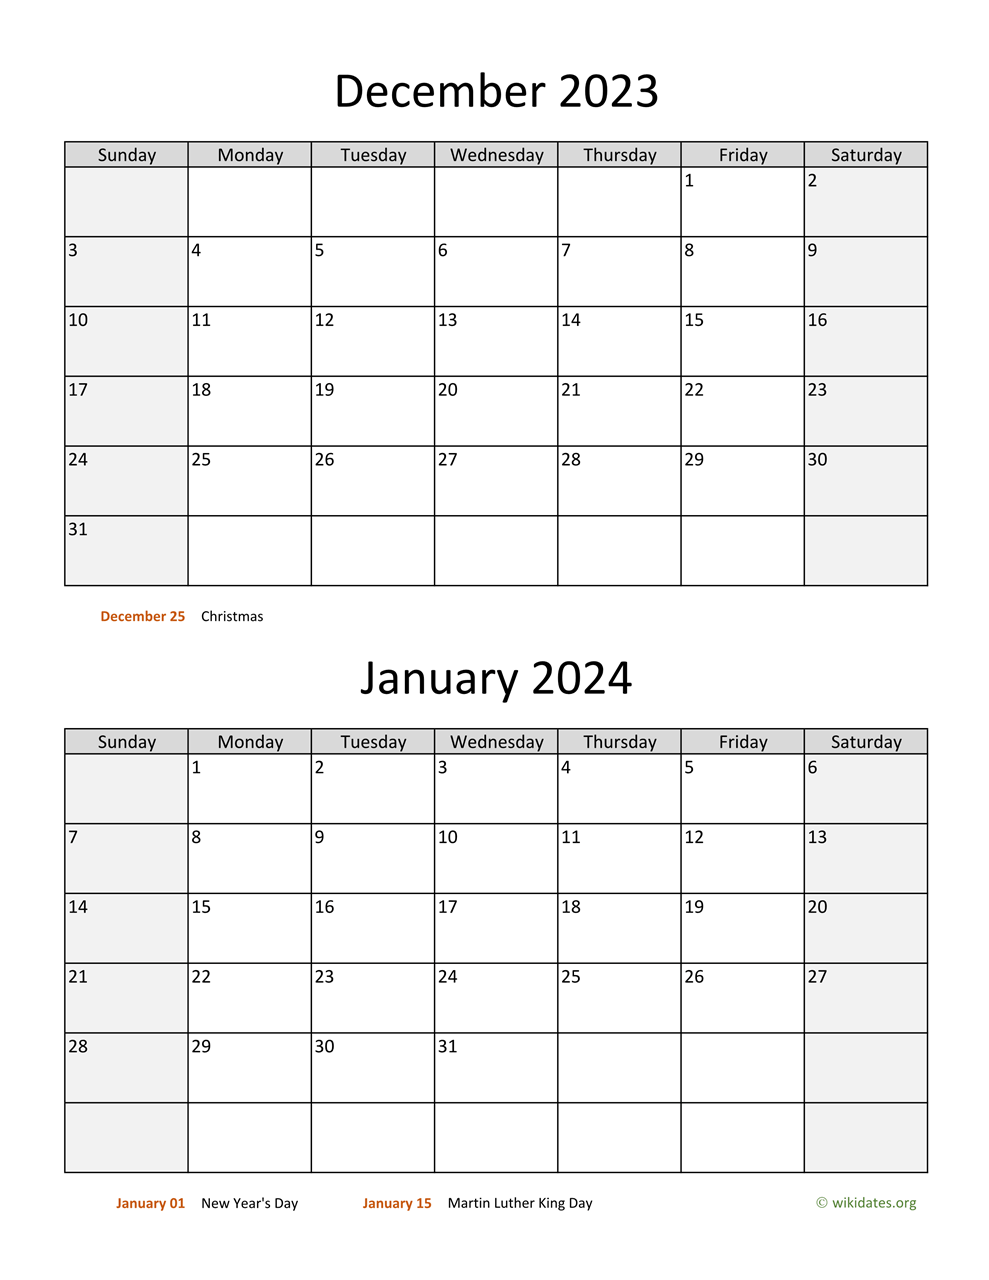 December 2023 and January 2024 Calendar | WikiDates.org